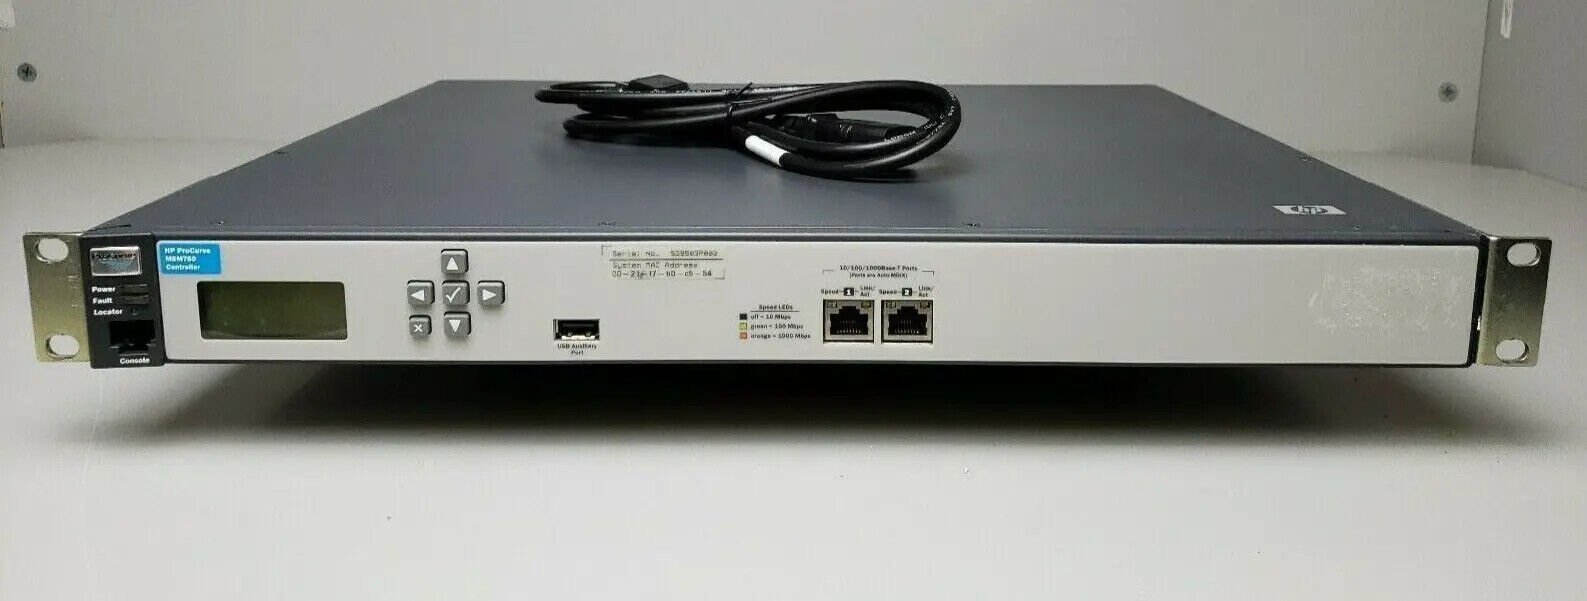 ProCurve J9421A - MSM760 Network Access Controller 40 License Factory Reset